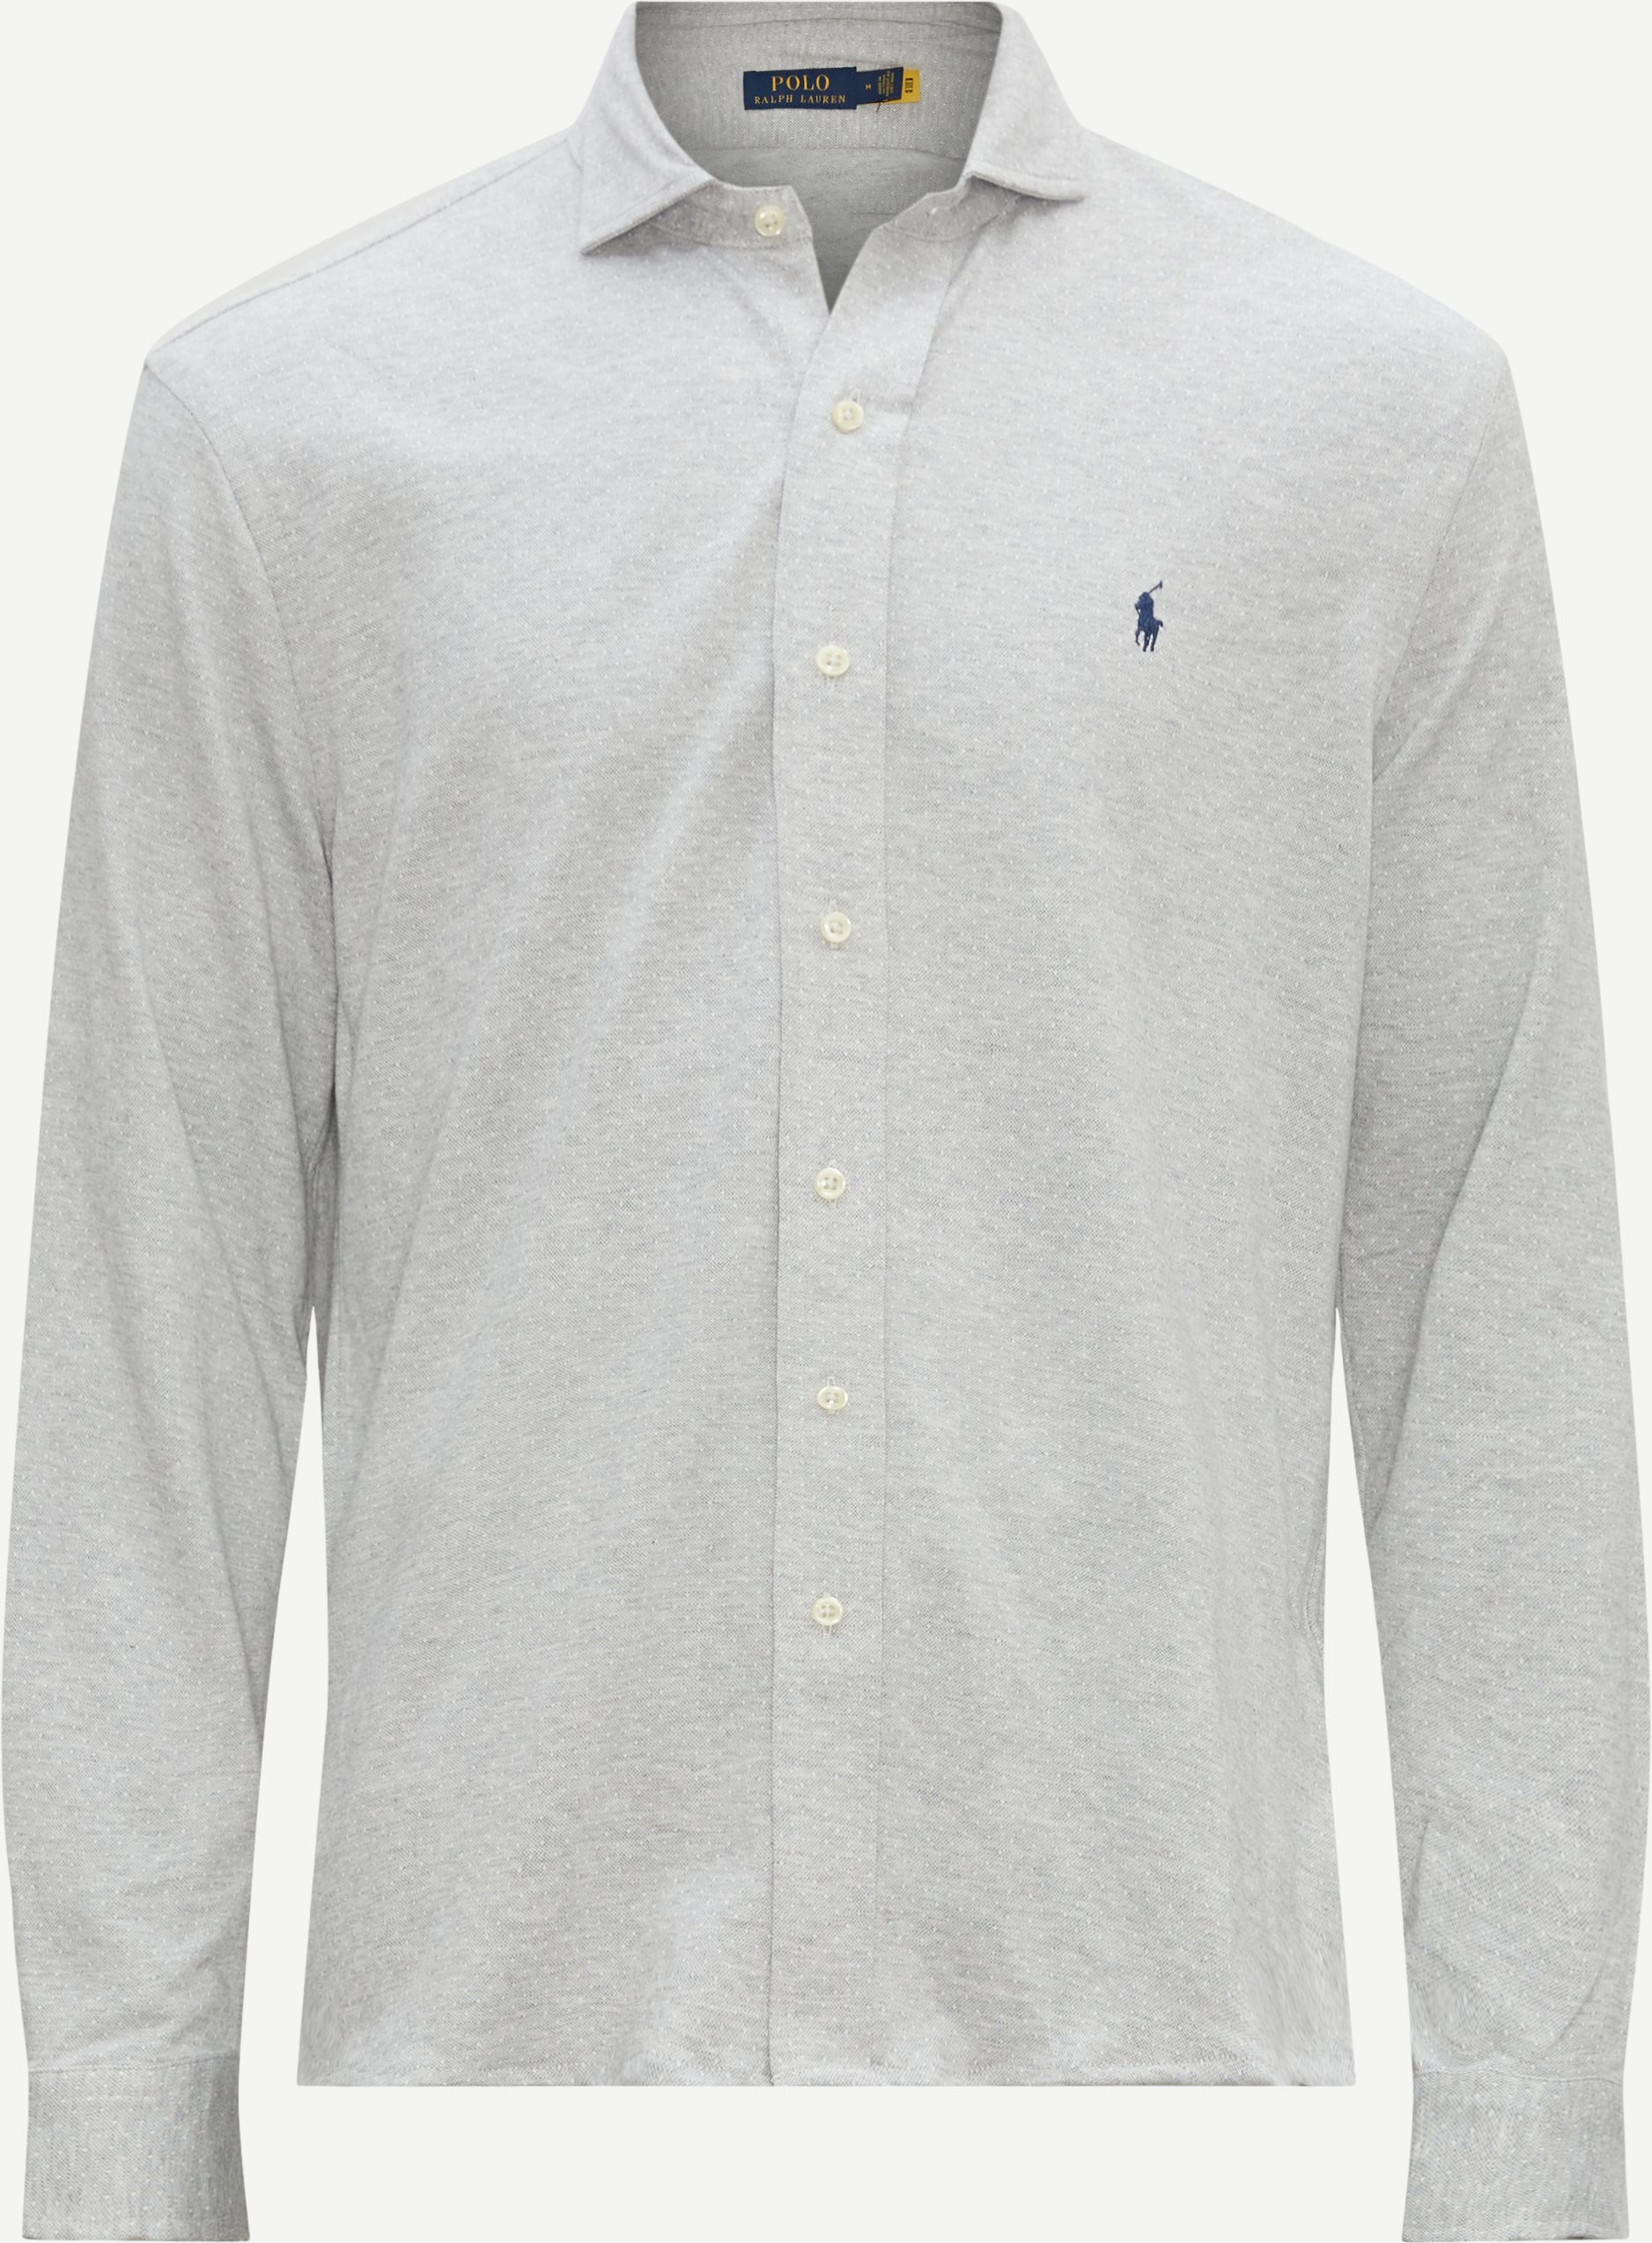 Polo Ralph Lauren Shirts 710899075 Grey